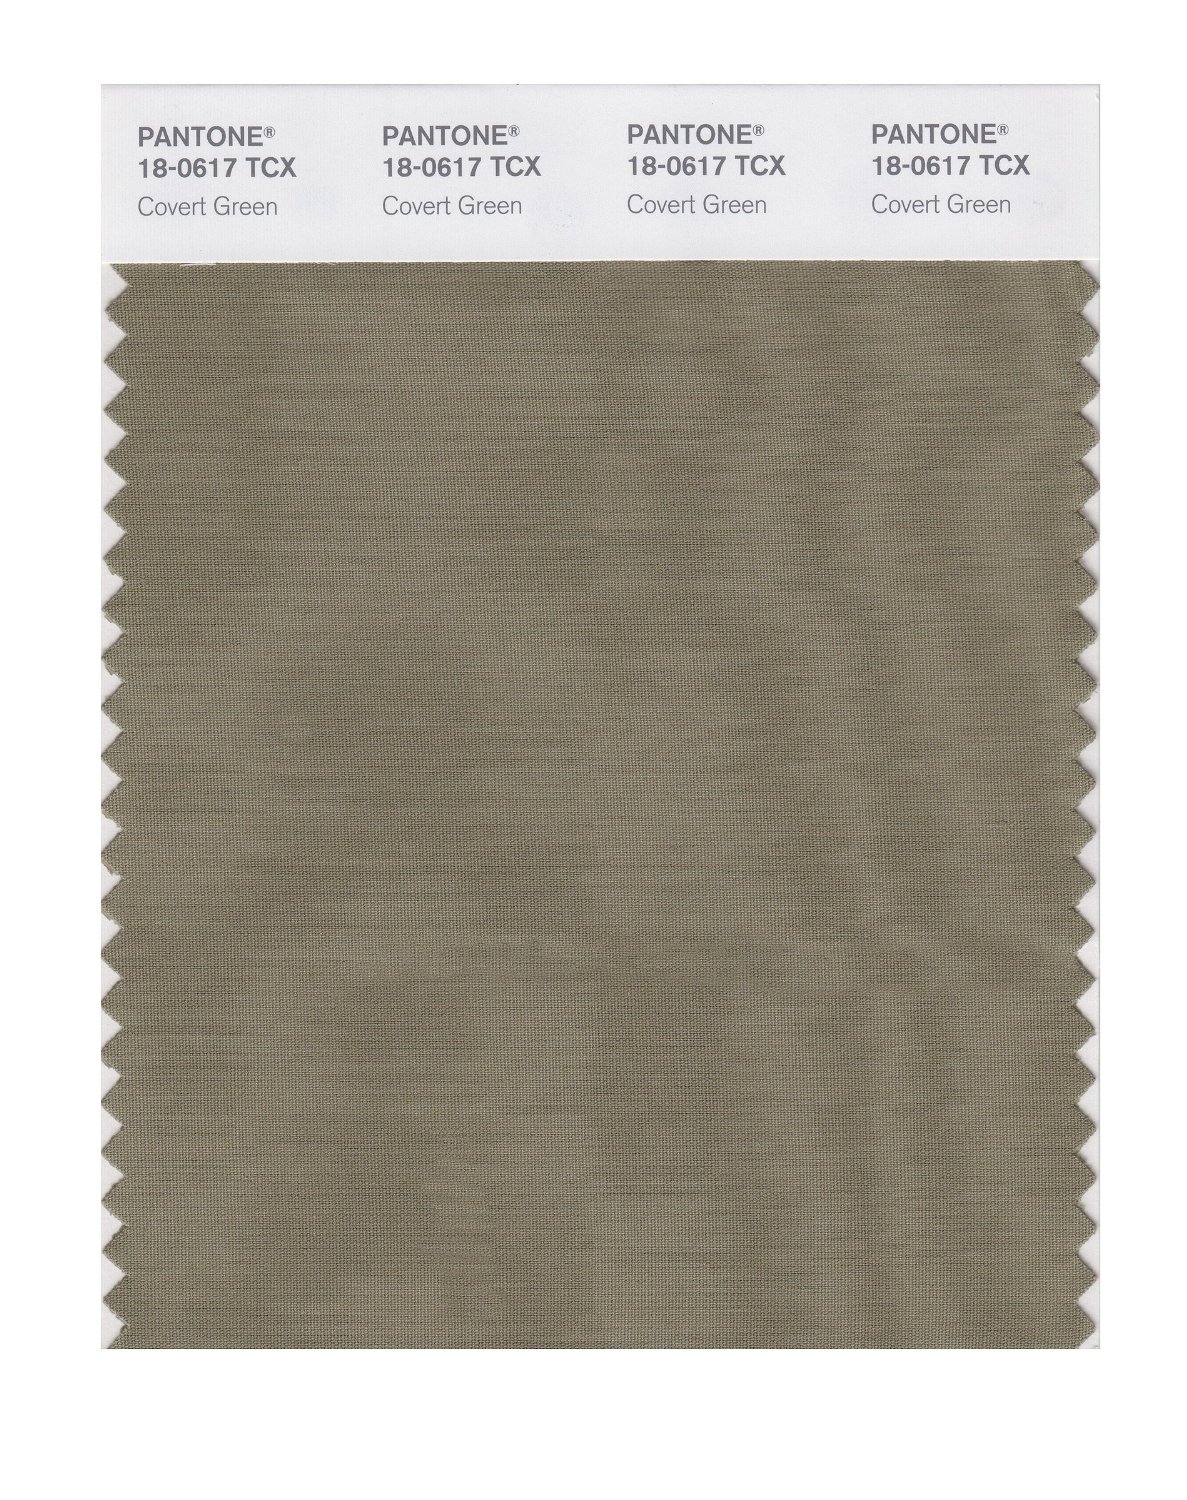 Pantone Cotton Swatch 18-0617 Covert Green